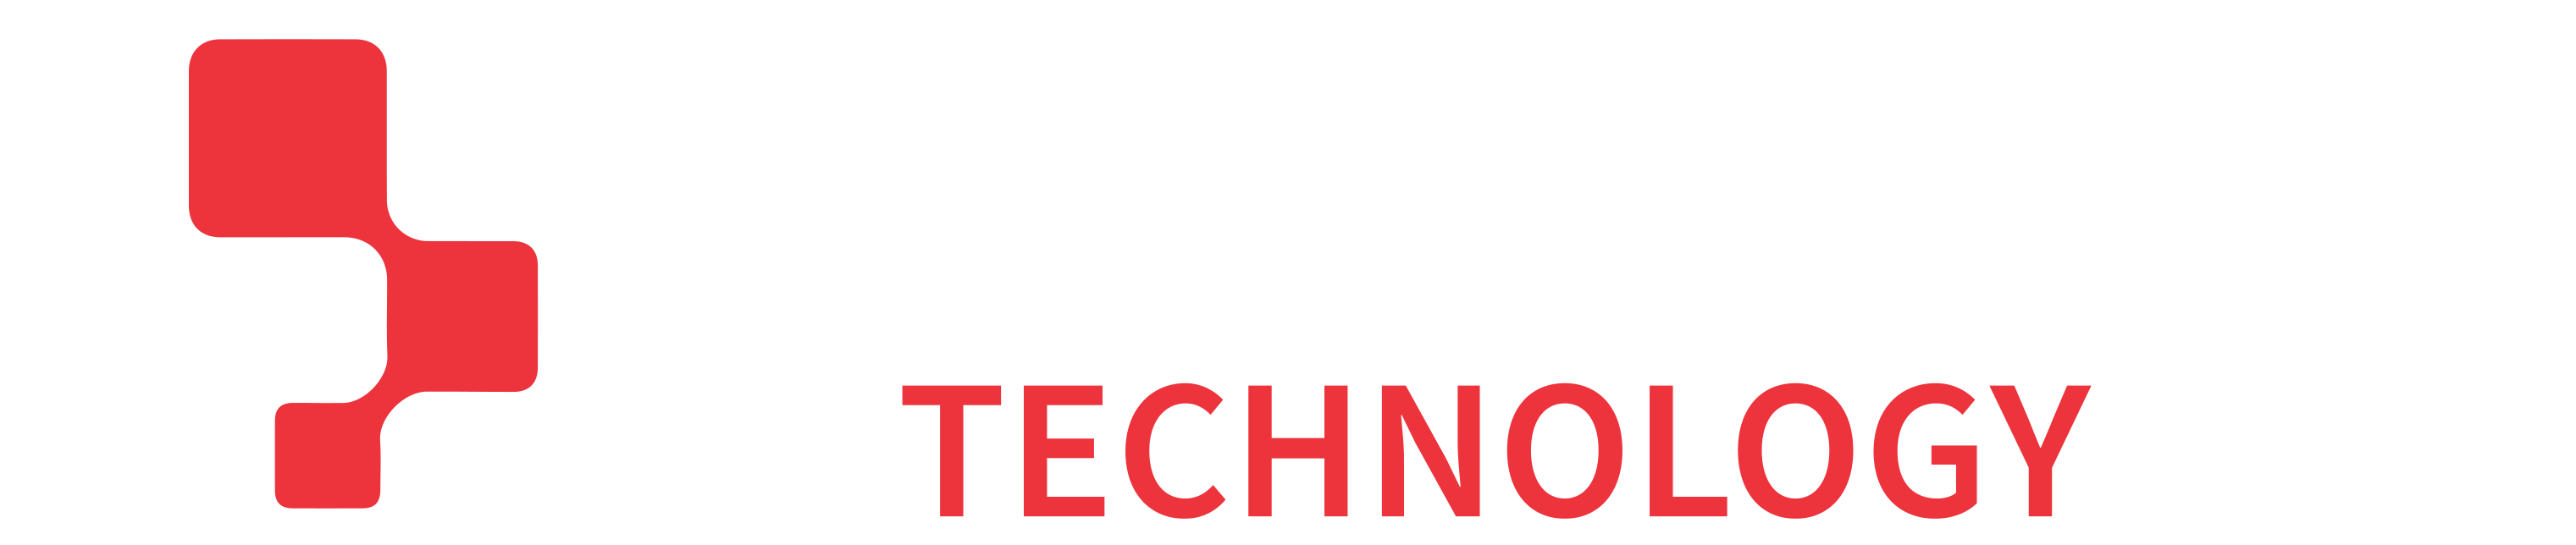 El Kayan Technology